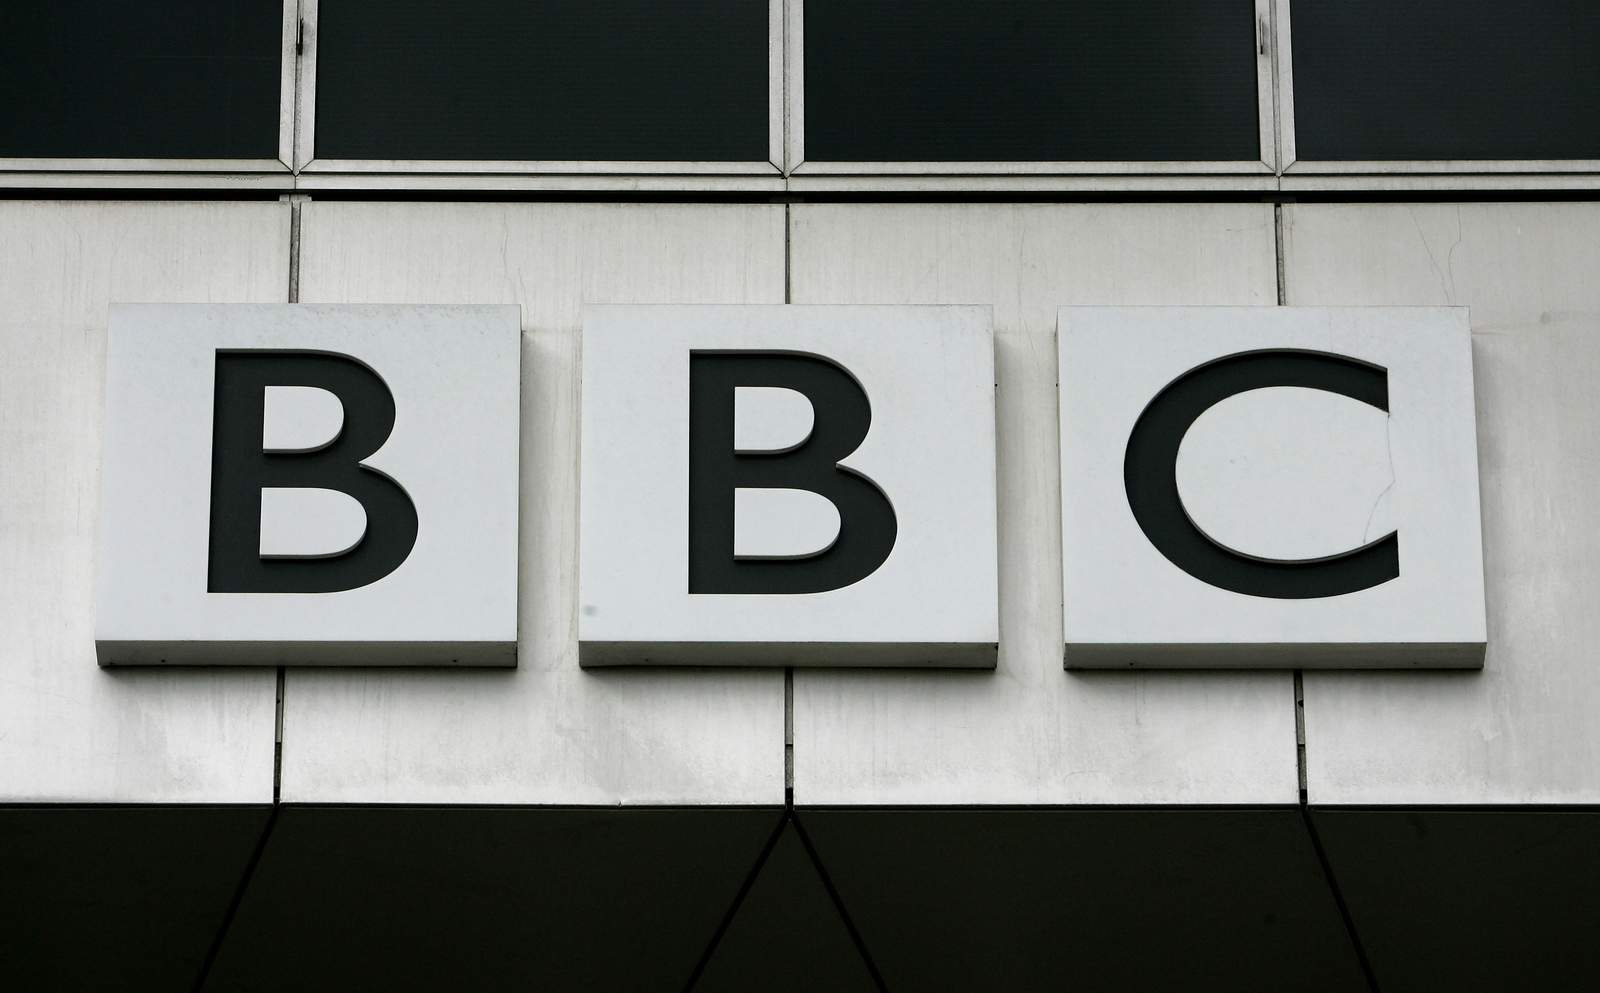 China blasts BBC report after summoning UK ambassador